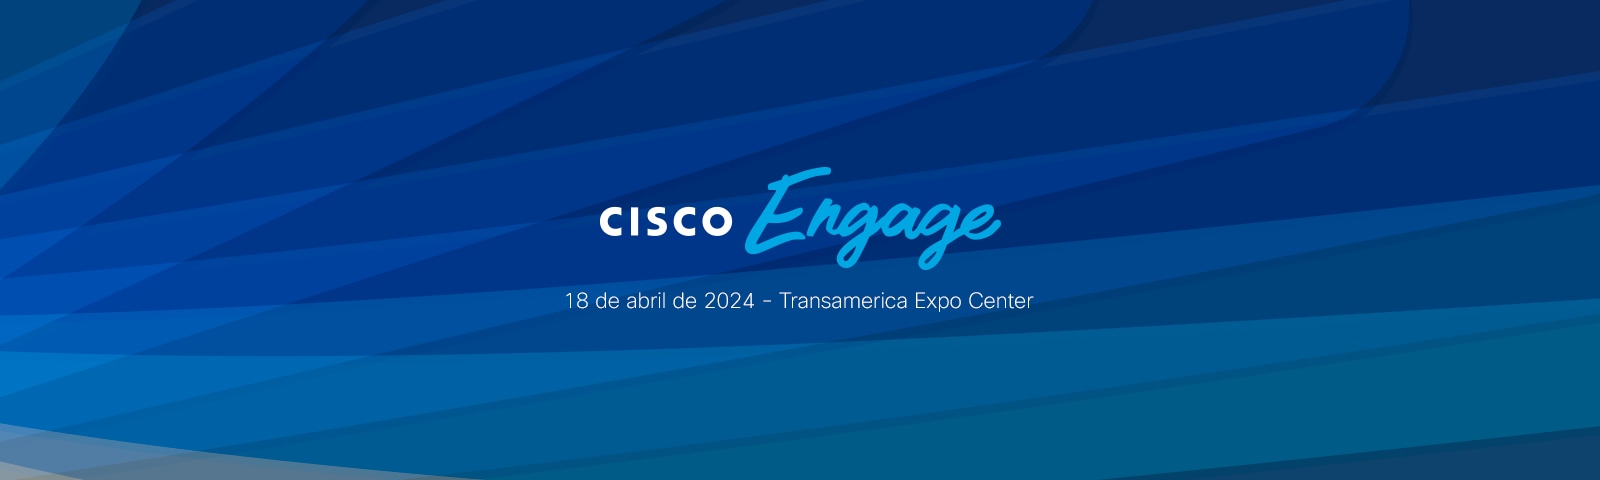 Cisco Engage